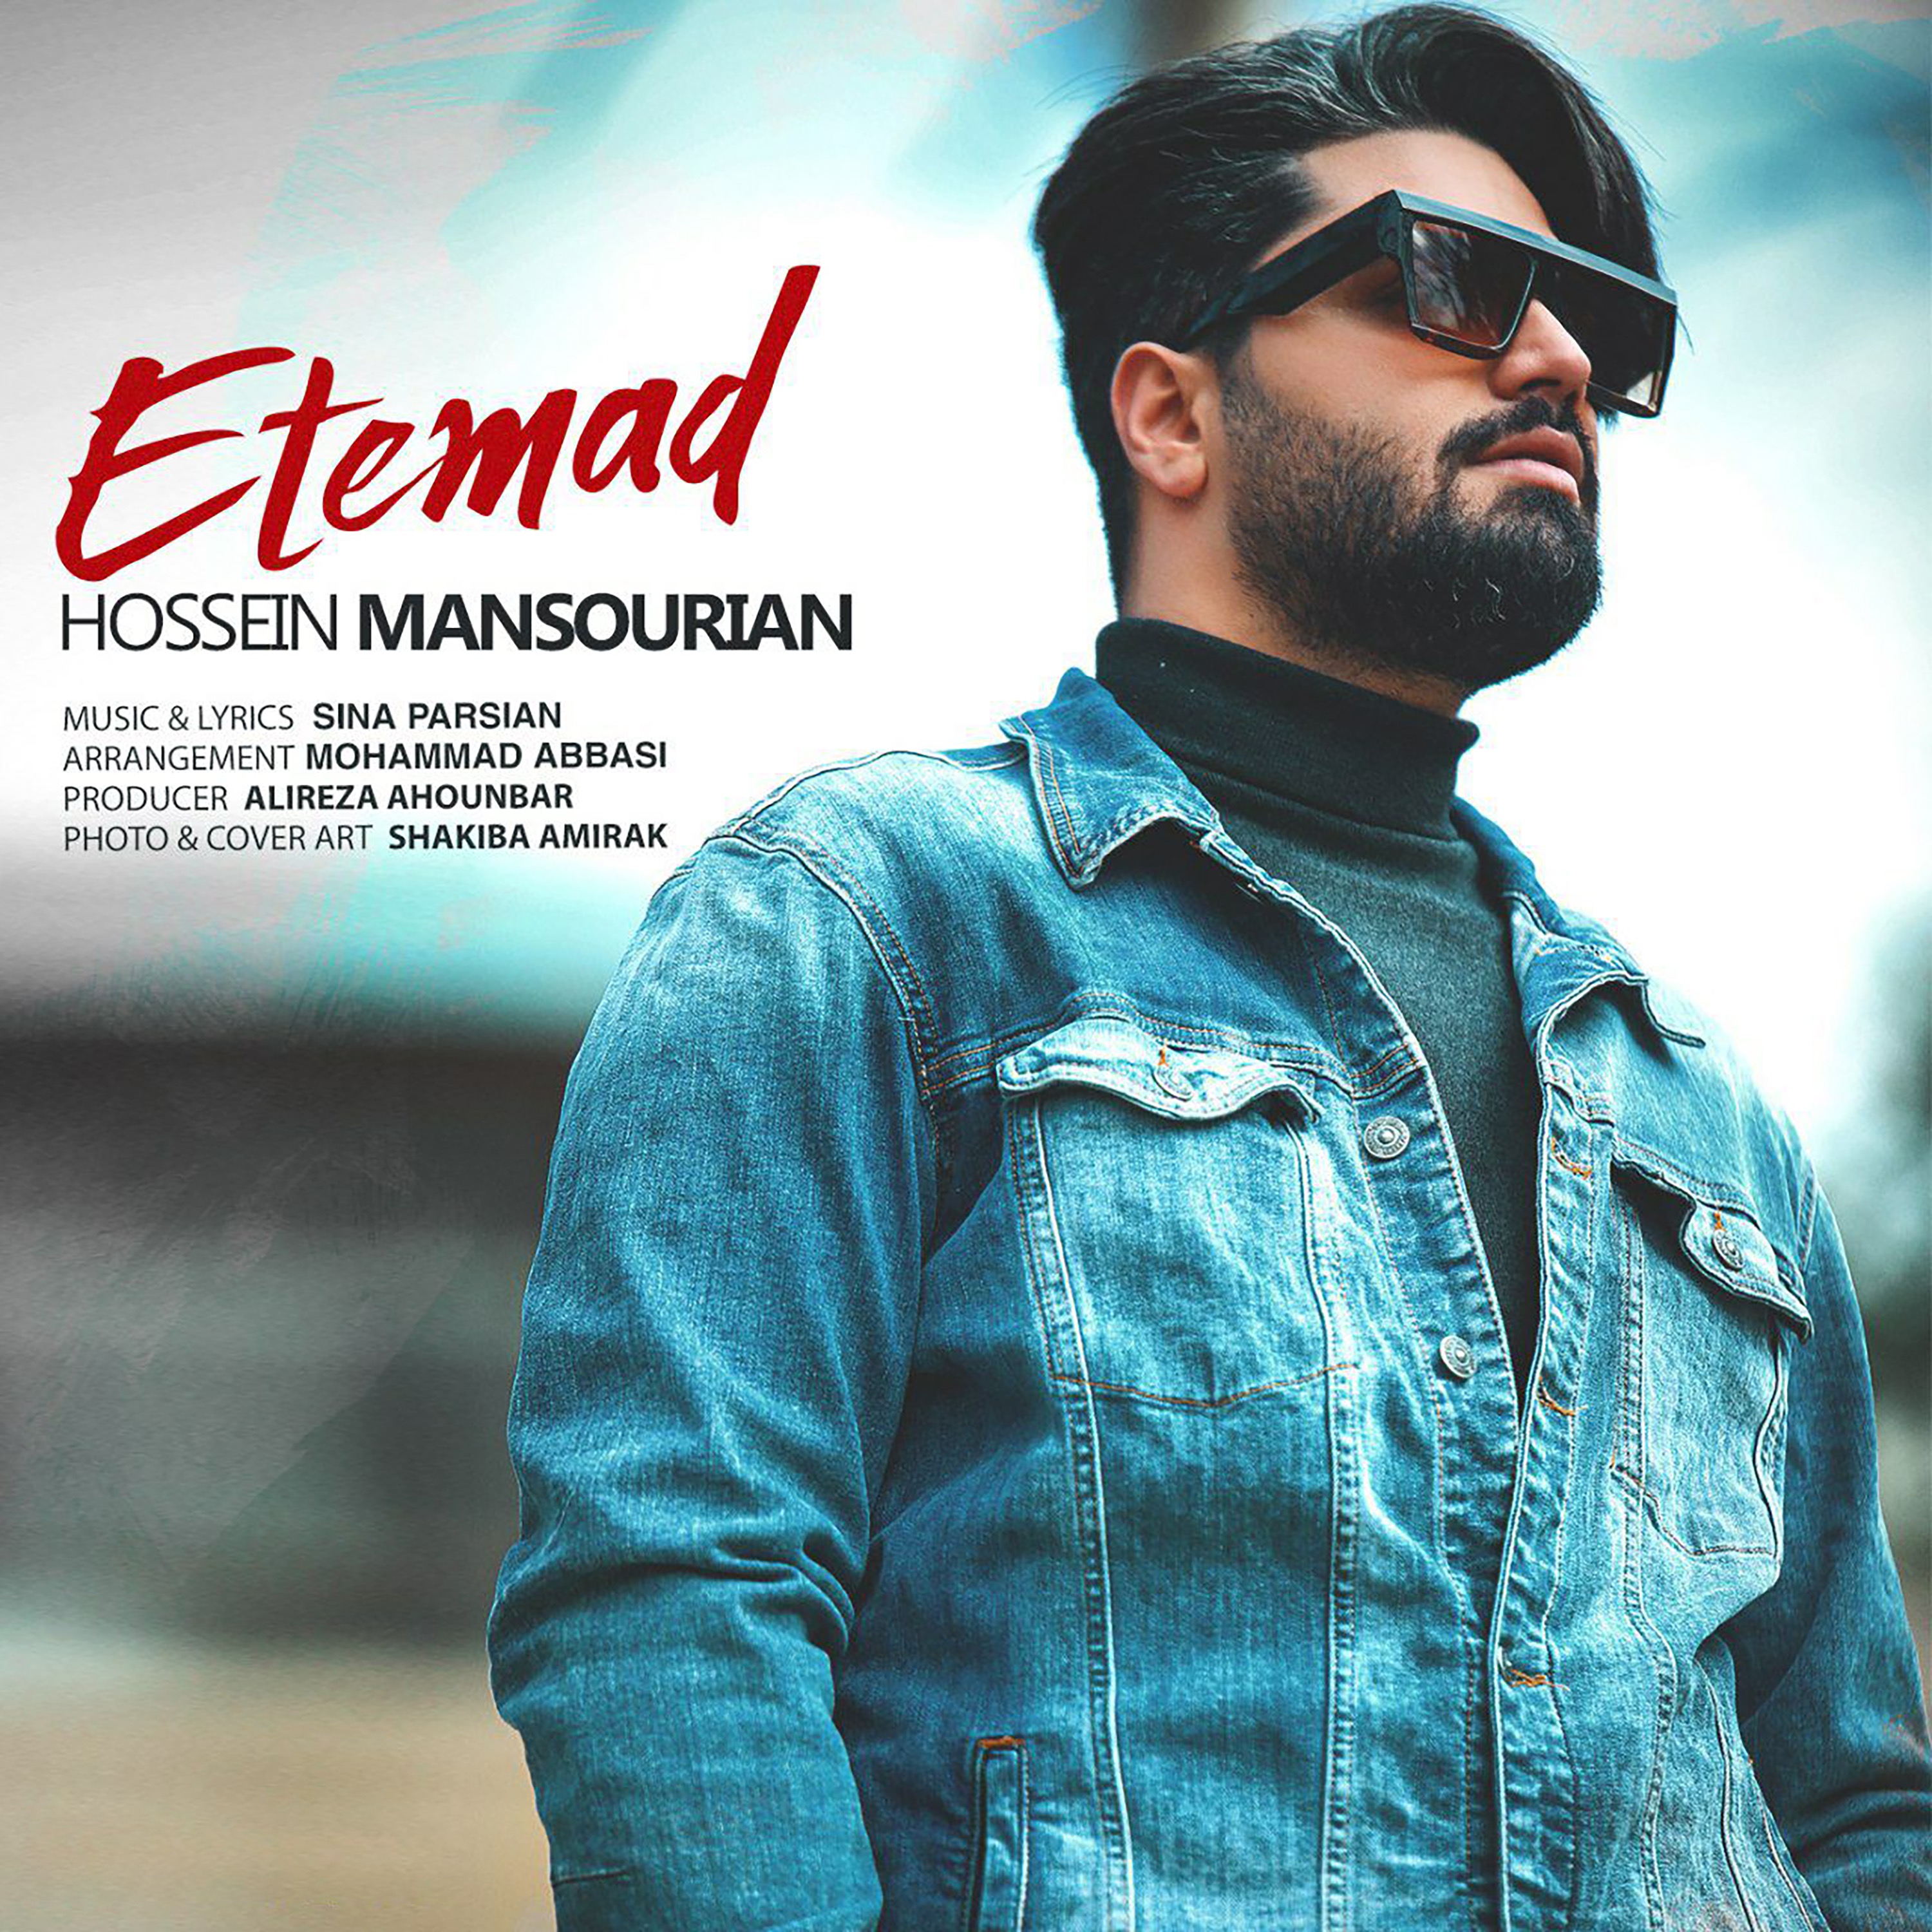  دانلود آهنگ جدید حسین منصوریان - اعتماد | Download New Music By Hossein Mansourian - Etemad